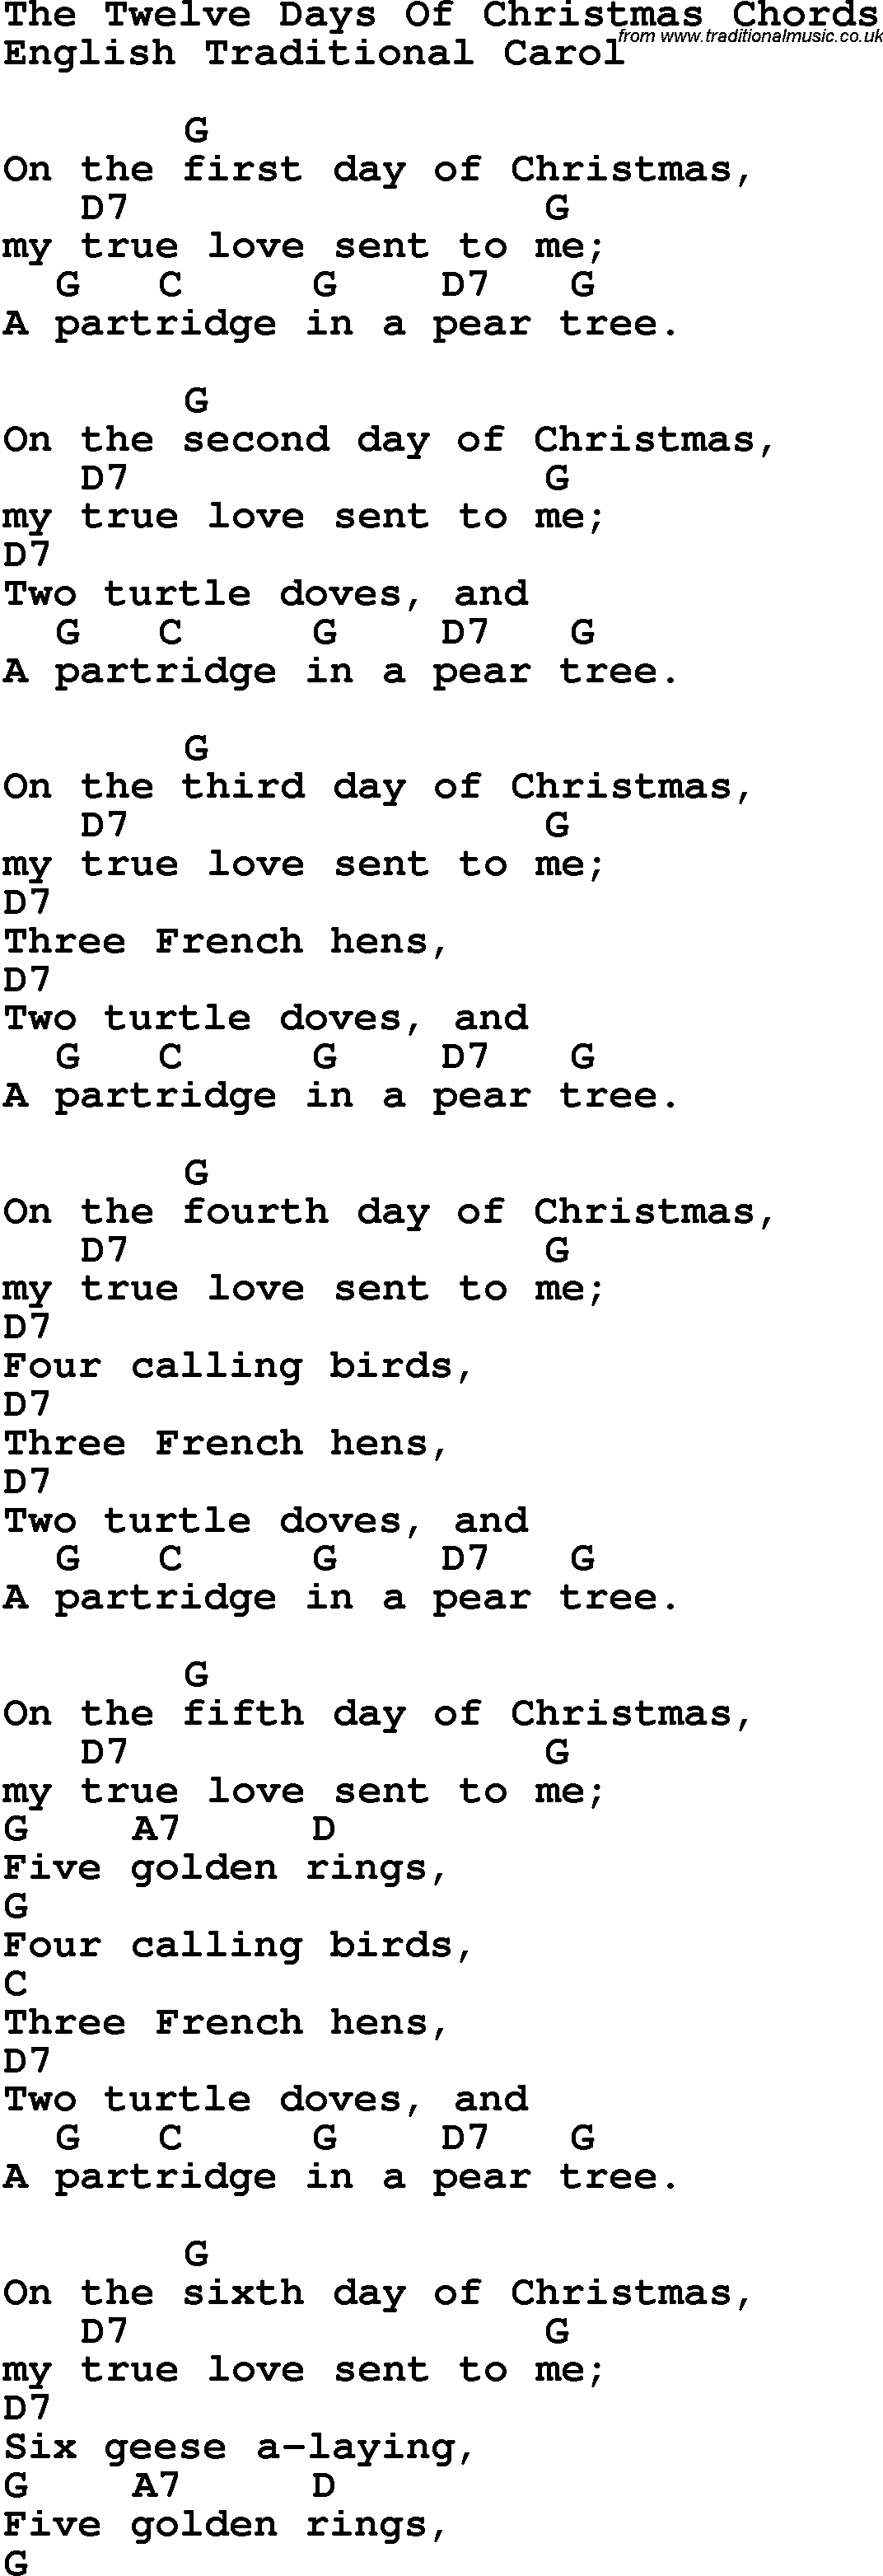 Twelve Days Of Christmas Lyrics Printable Search Results - Christmas Wallpapers Gallery